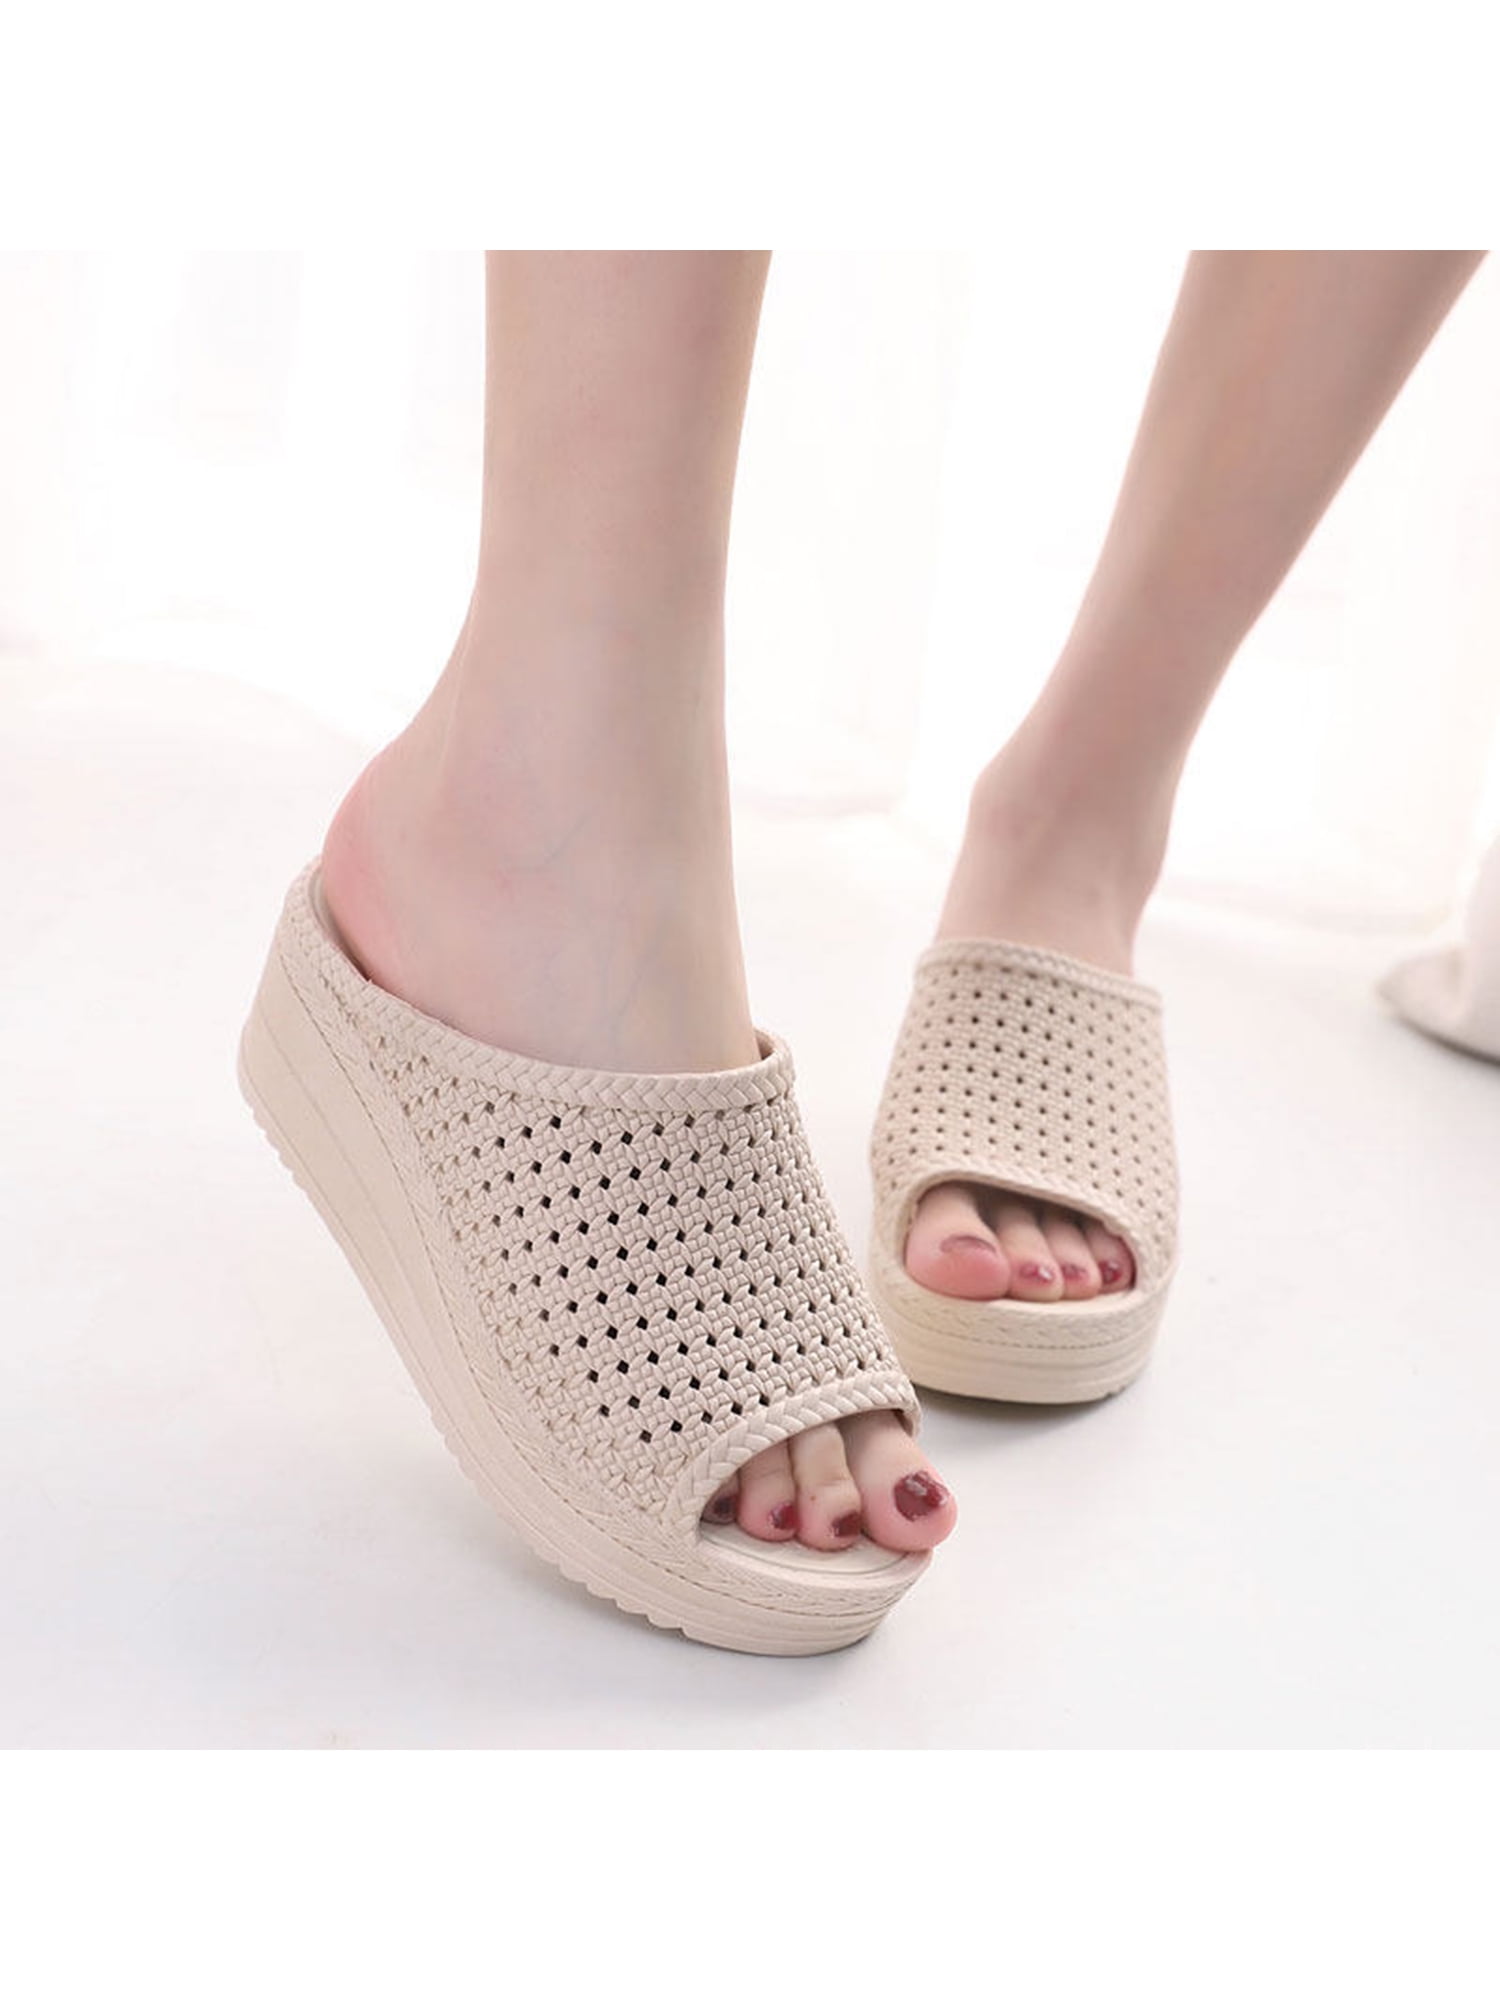 Womens Open Toe Wedge High Heel Slide Slipper Platform Sandals Casual Shoes NEW